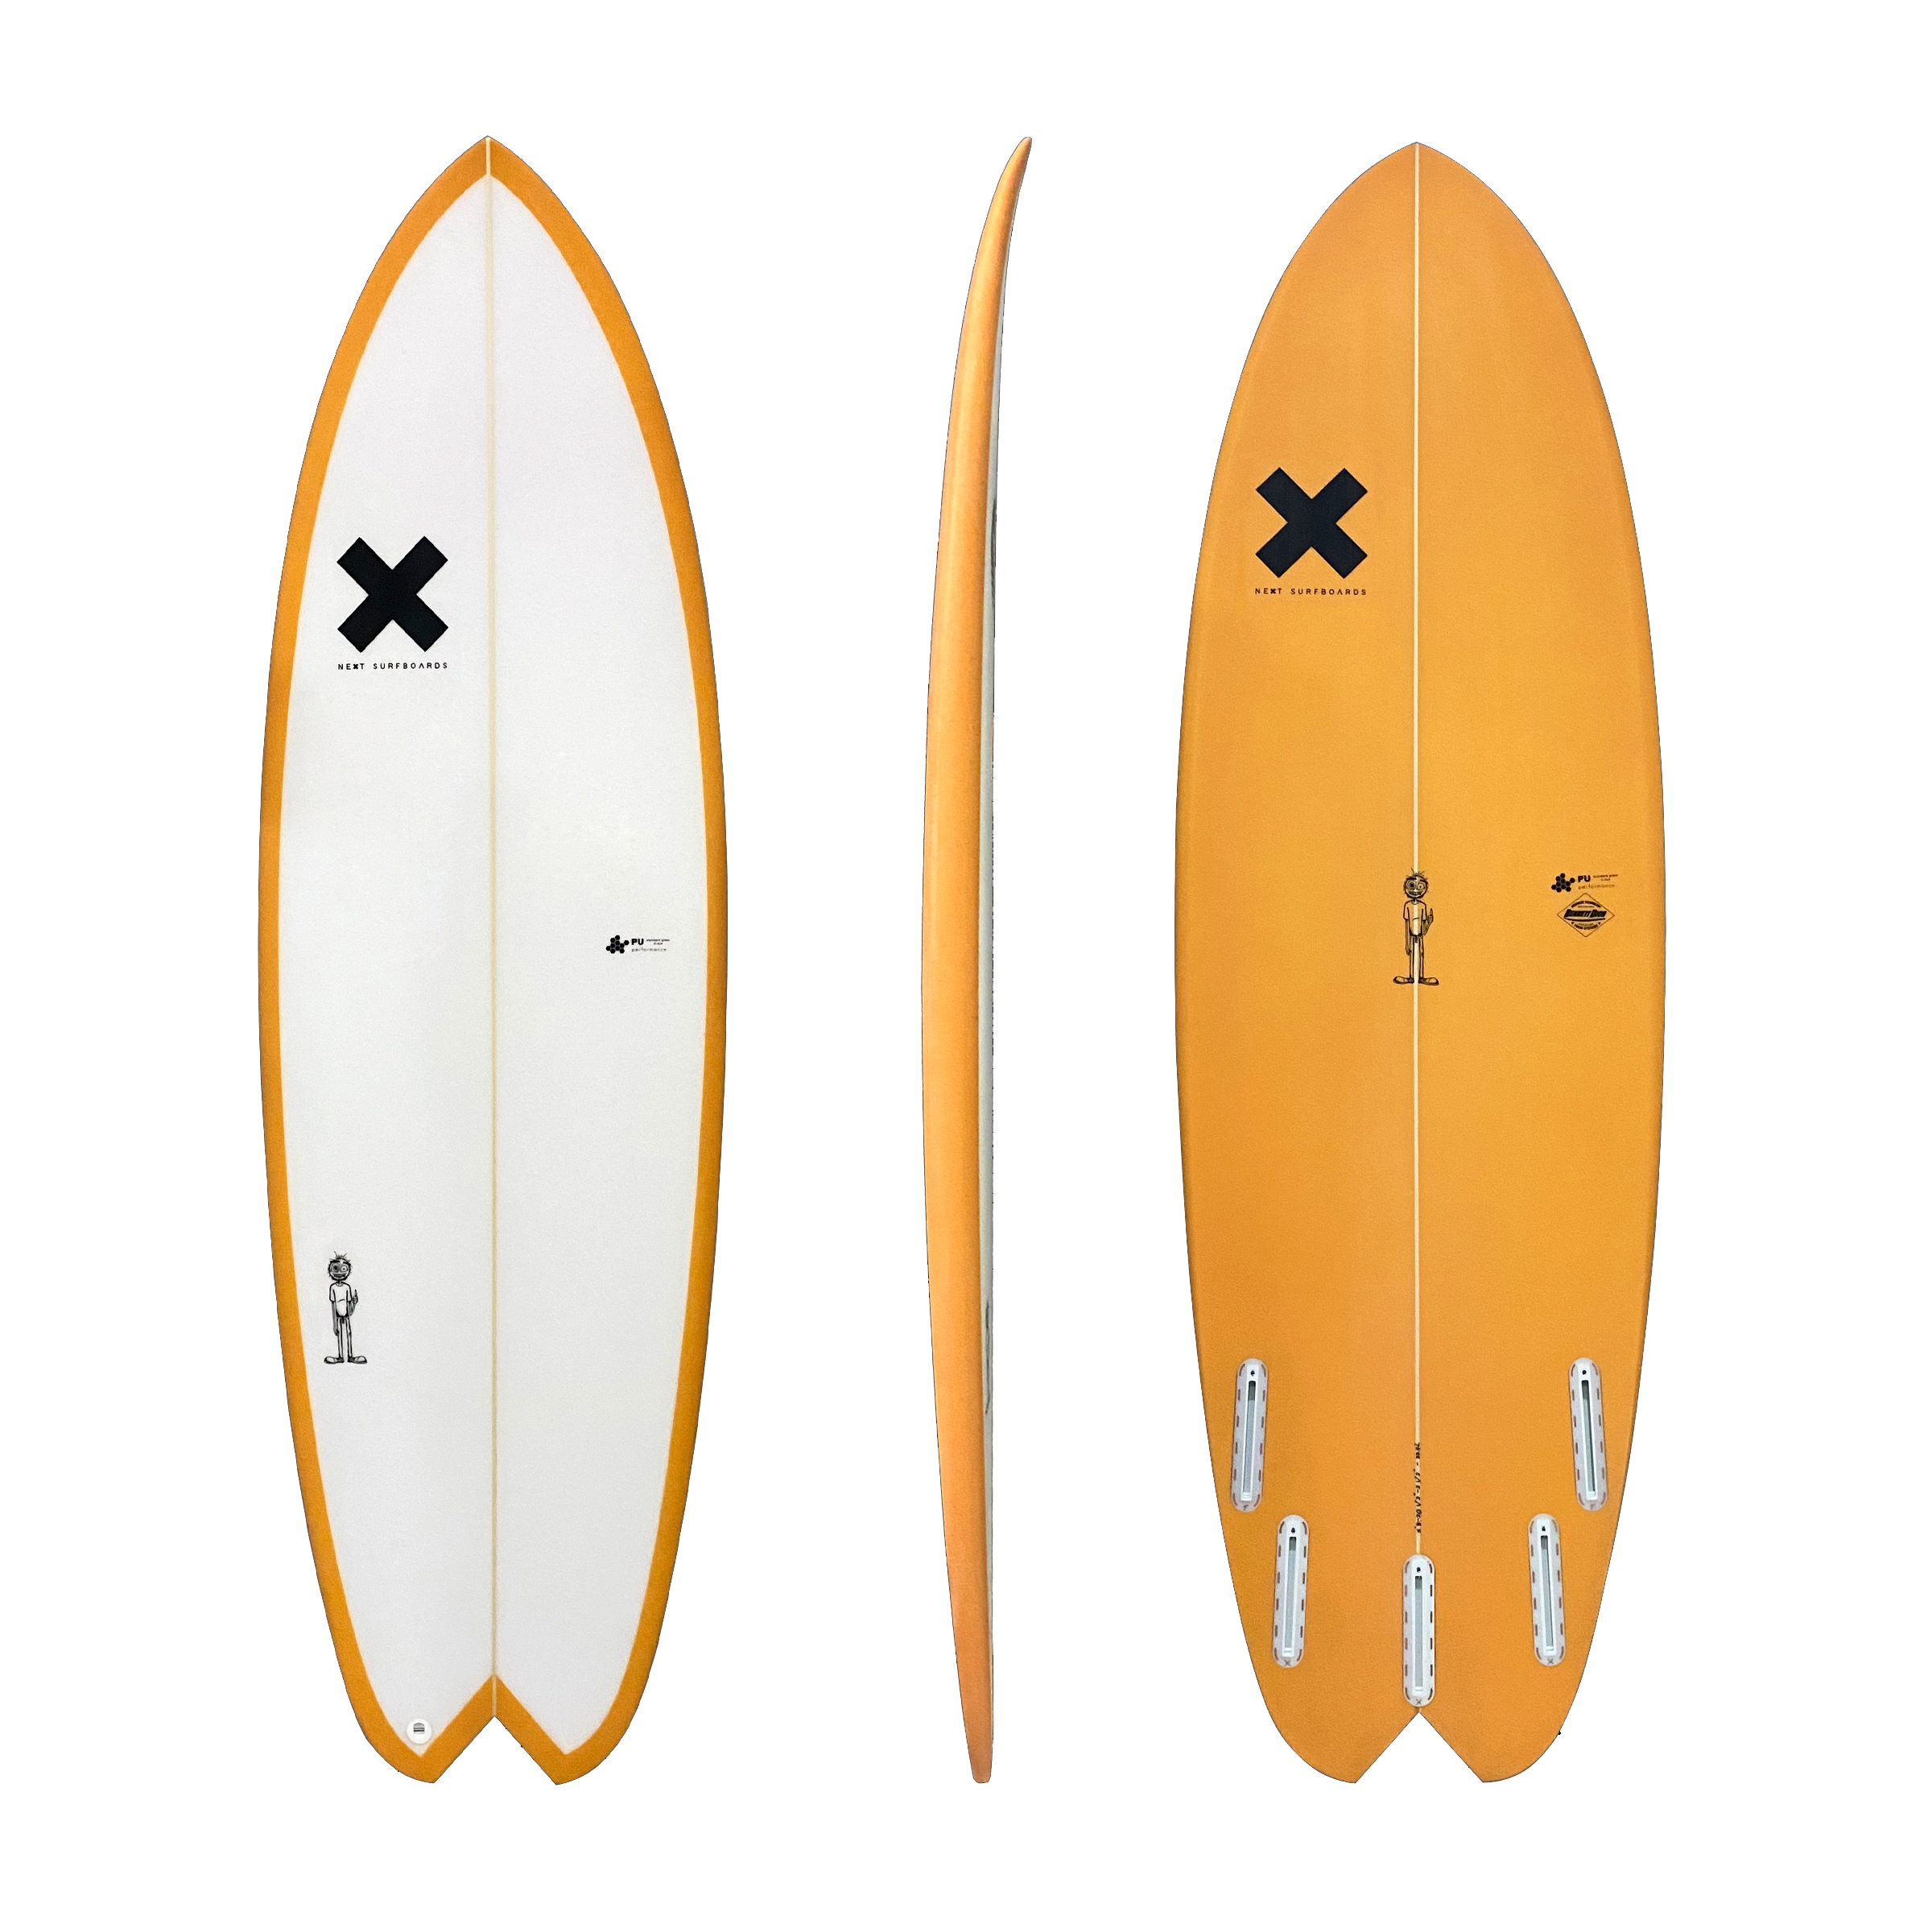 New Joy - Next surfboards